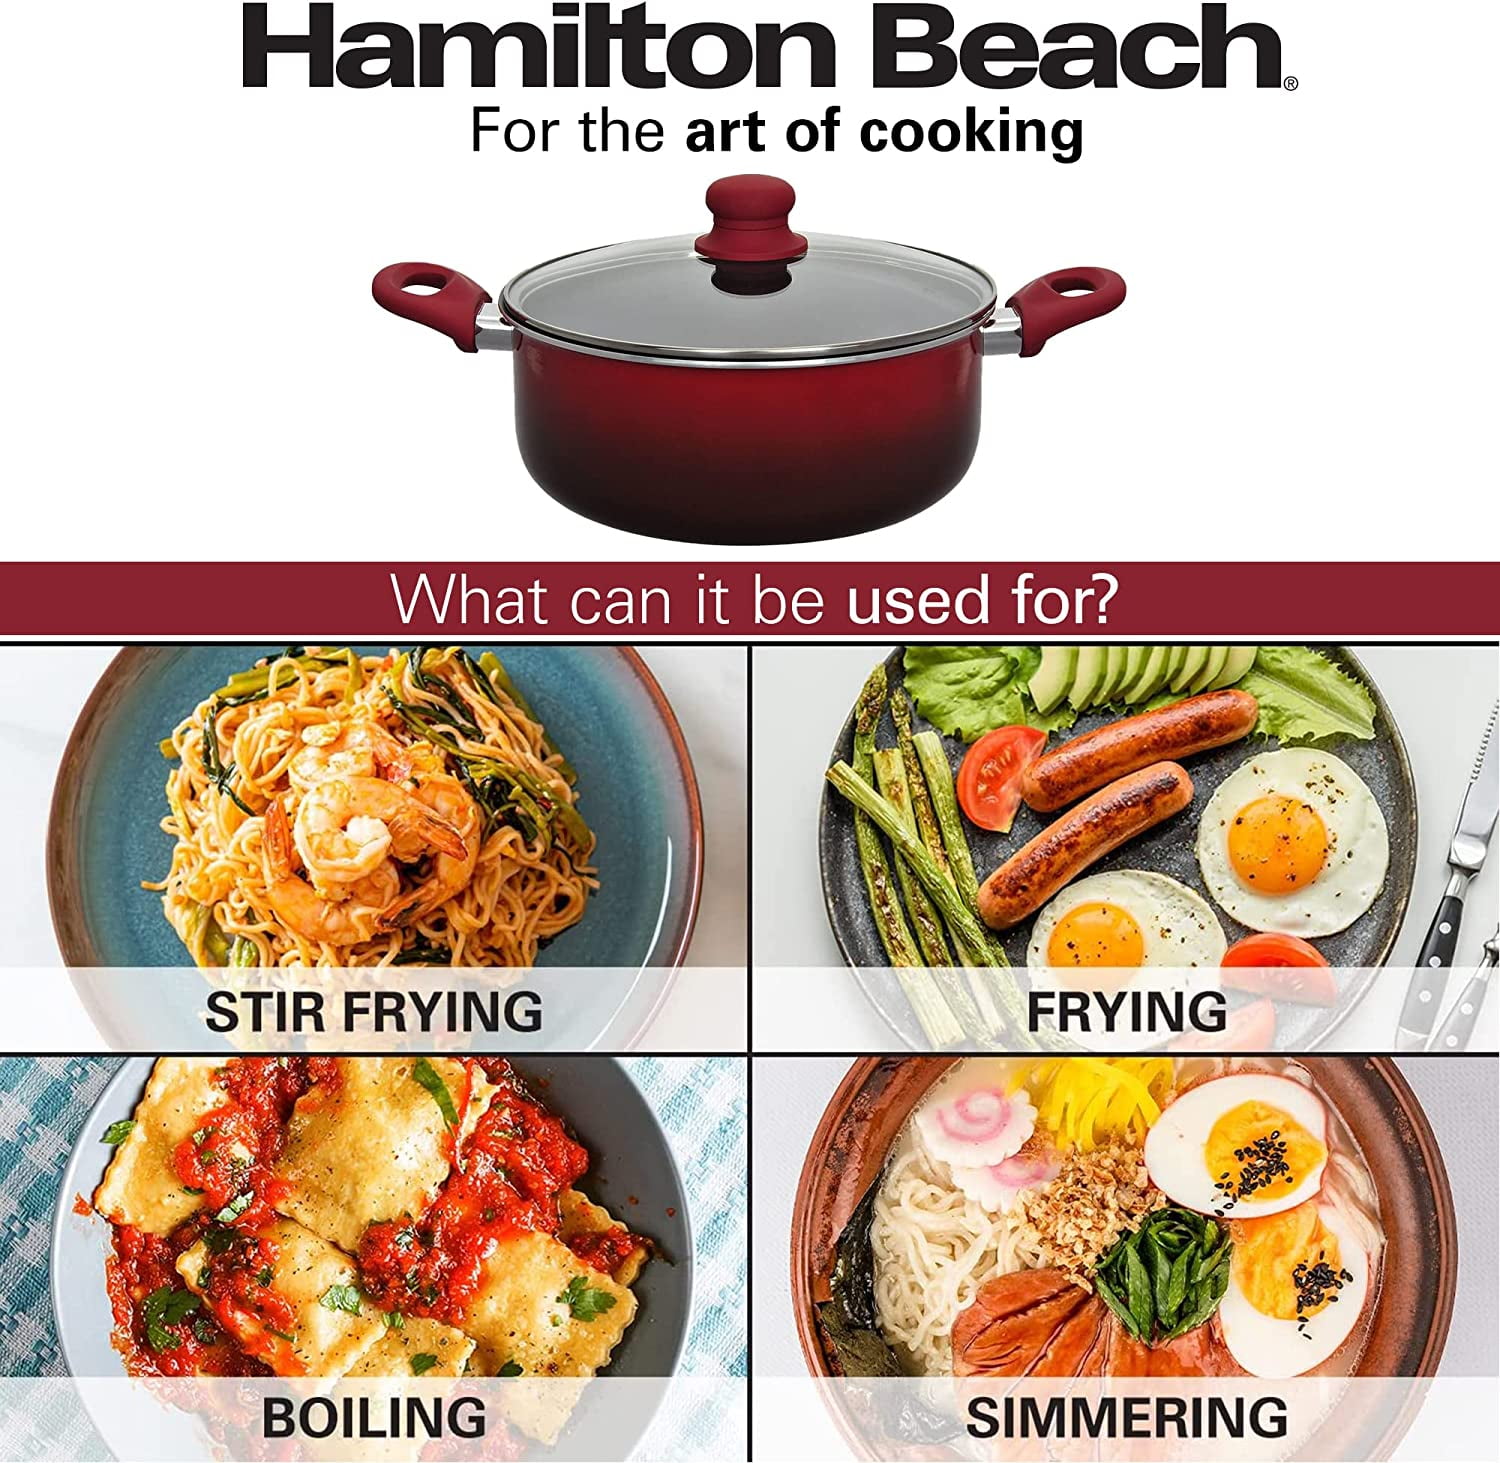 Hamilton Beach 5-Quart Aluminum Dutch Oven at